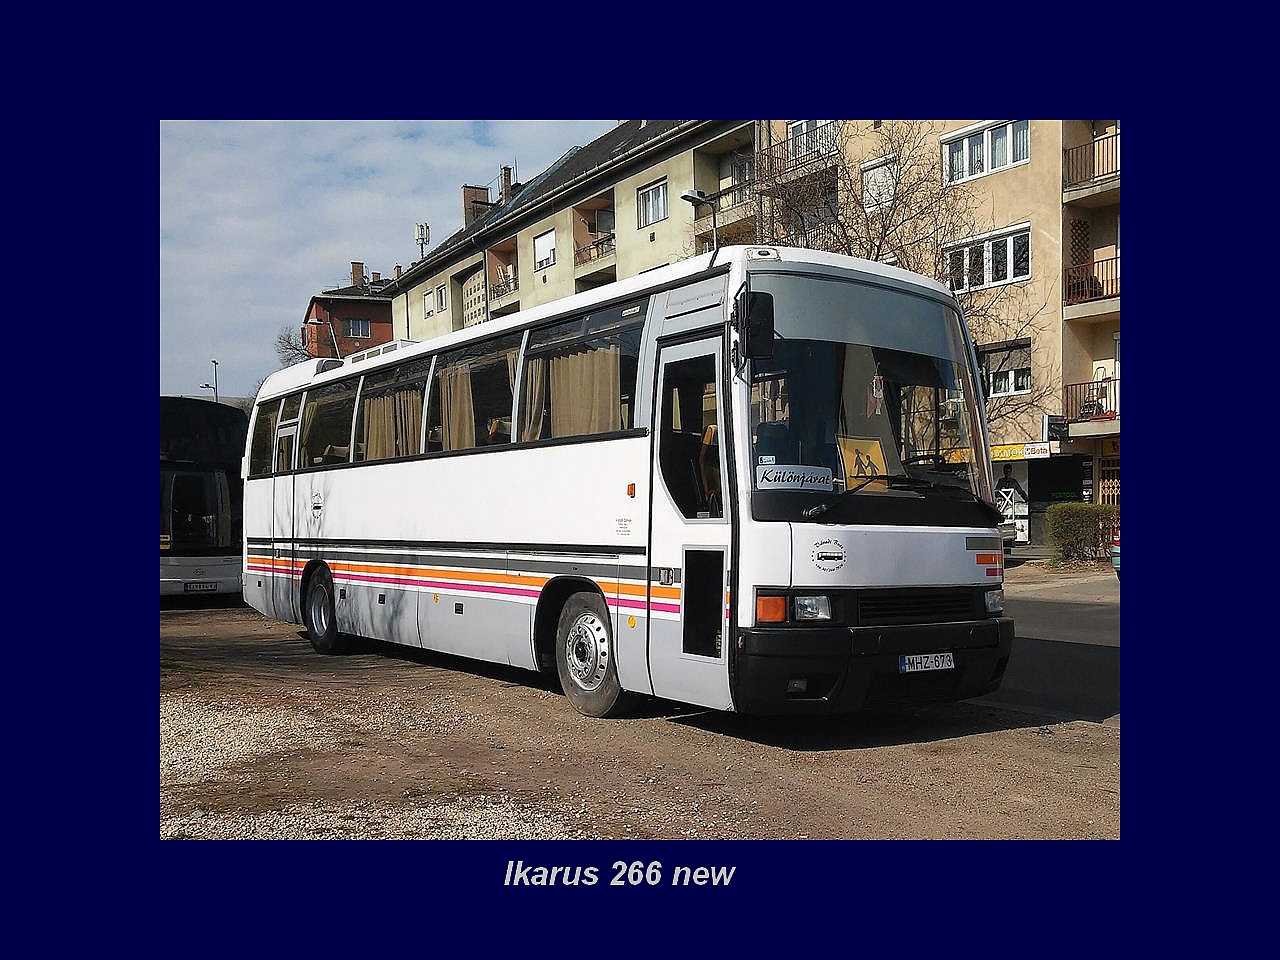 Magyar Busz, Ikarus 266 New